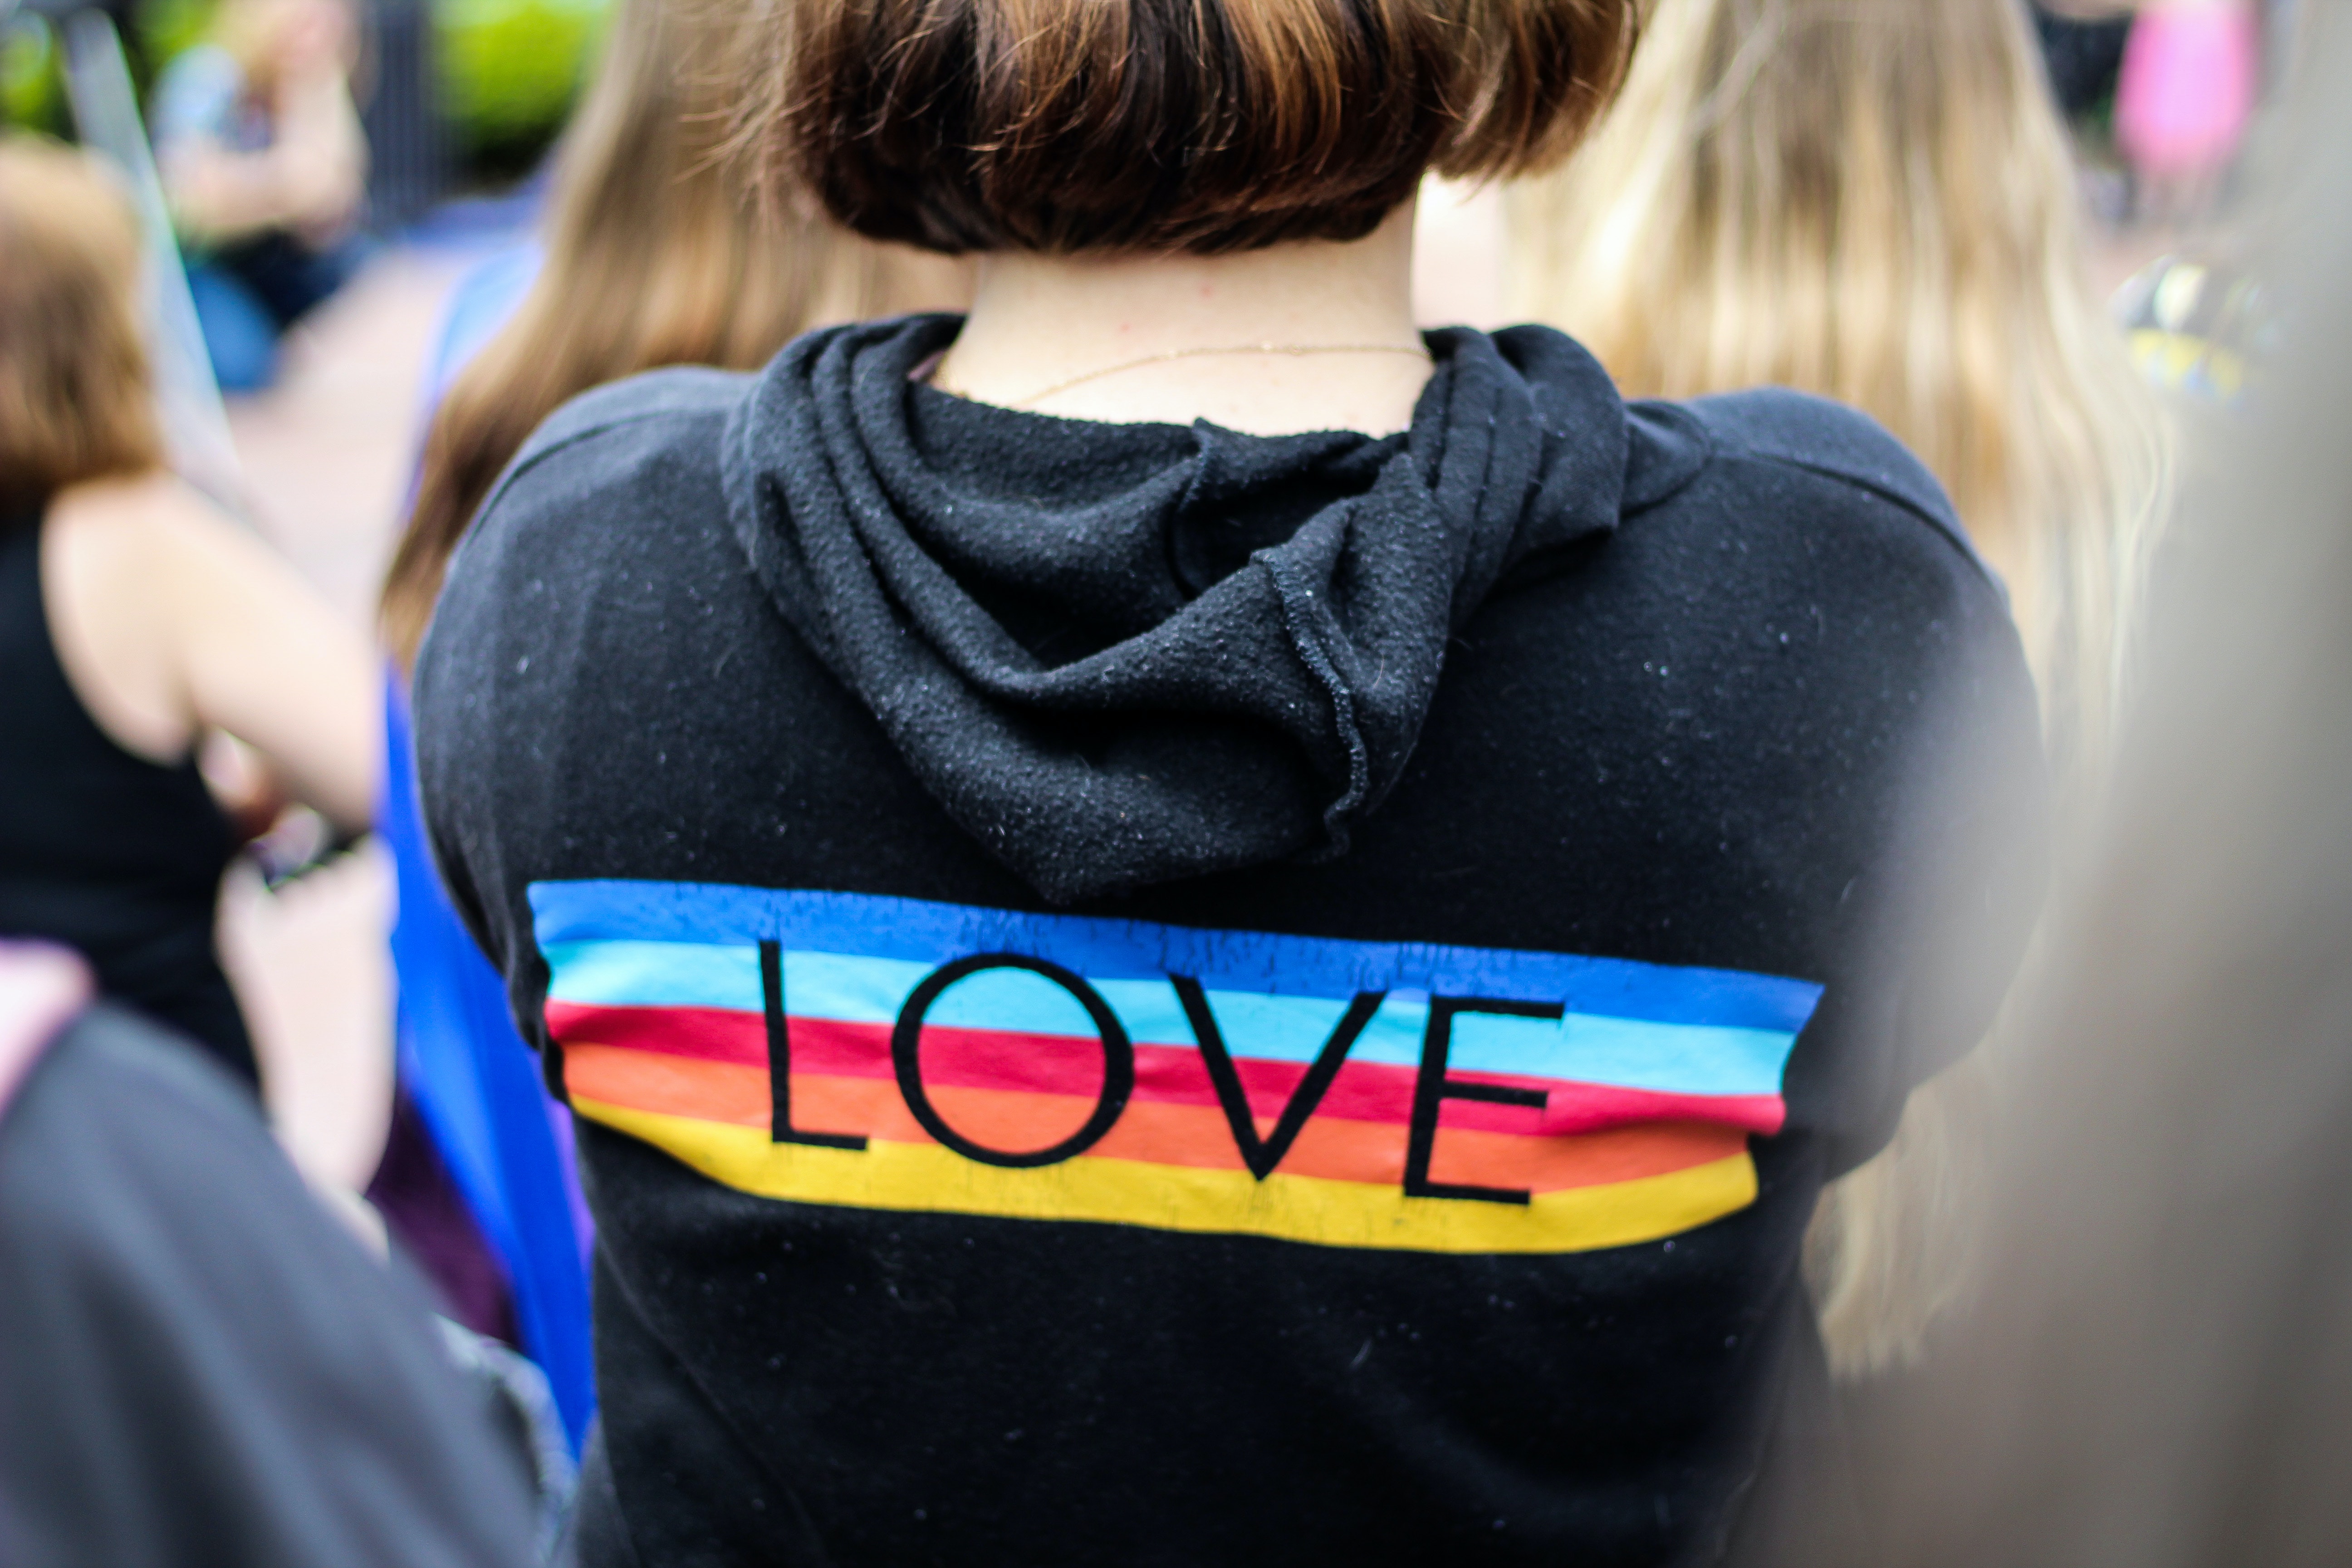 Pride στα Χανιά: Καλούν ομοφοβική αντιδιαδήλωση, ο ρόλος των Σπαρτιατών - «Θα μας βρουν μπροστά τους», λένε οικογένειες του Ουράνιου Τόξου